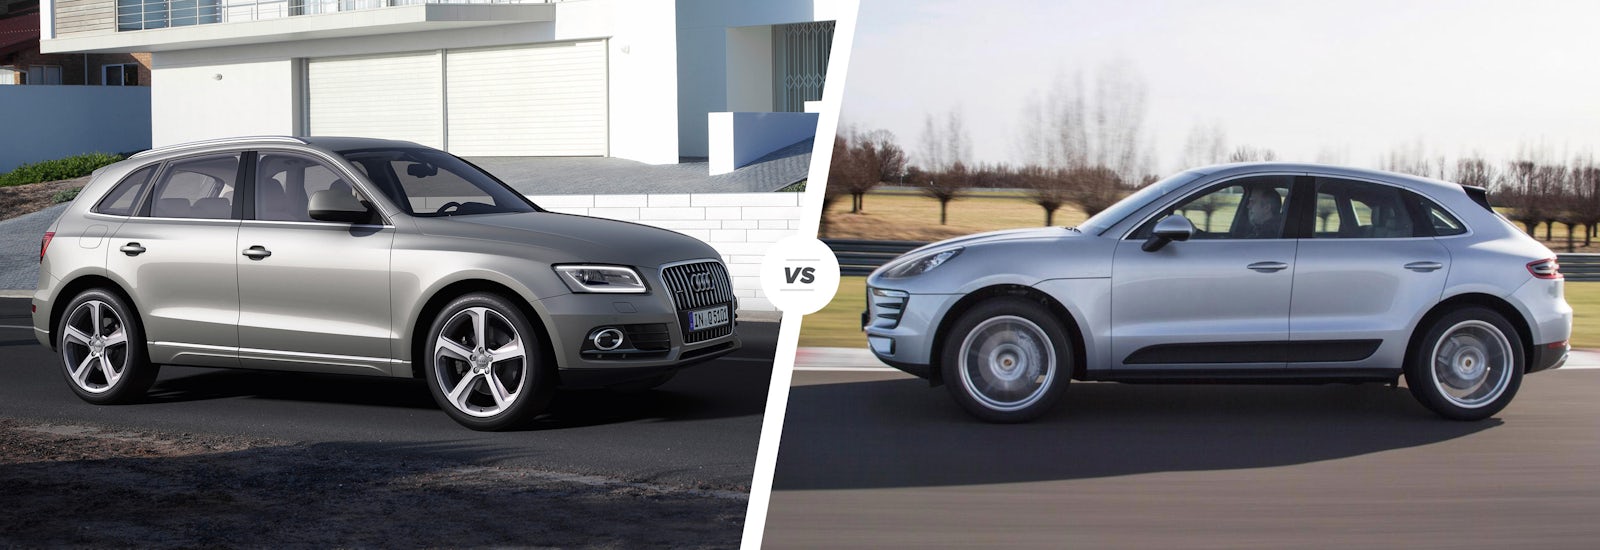 Audi Q5 vs Porsche Macan clash of the SUVs carwow